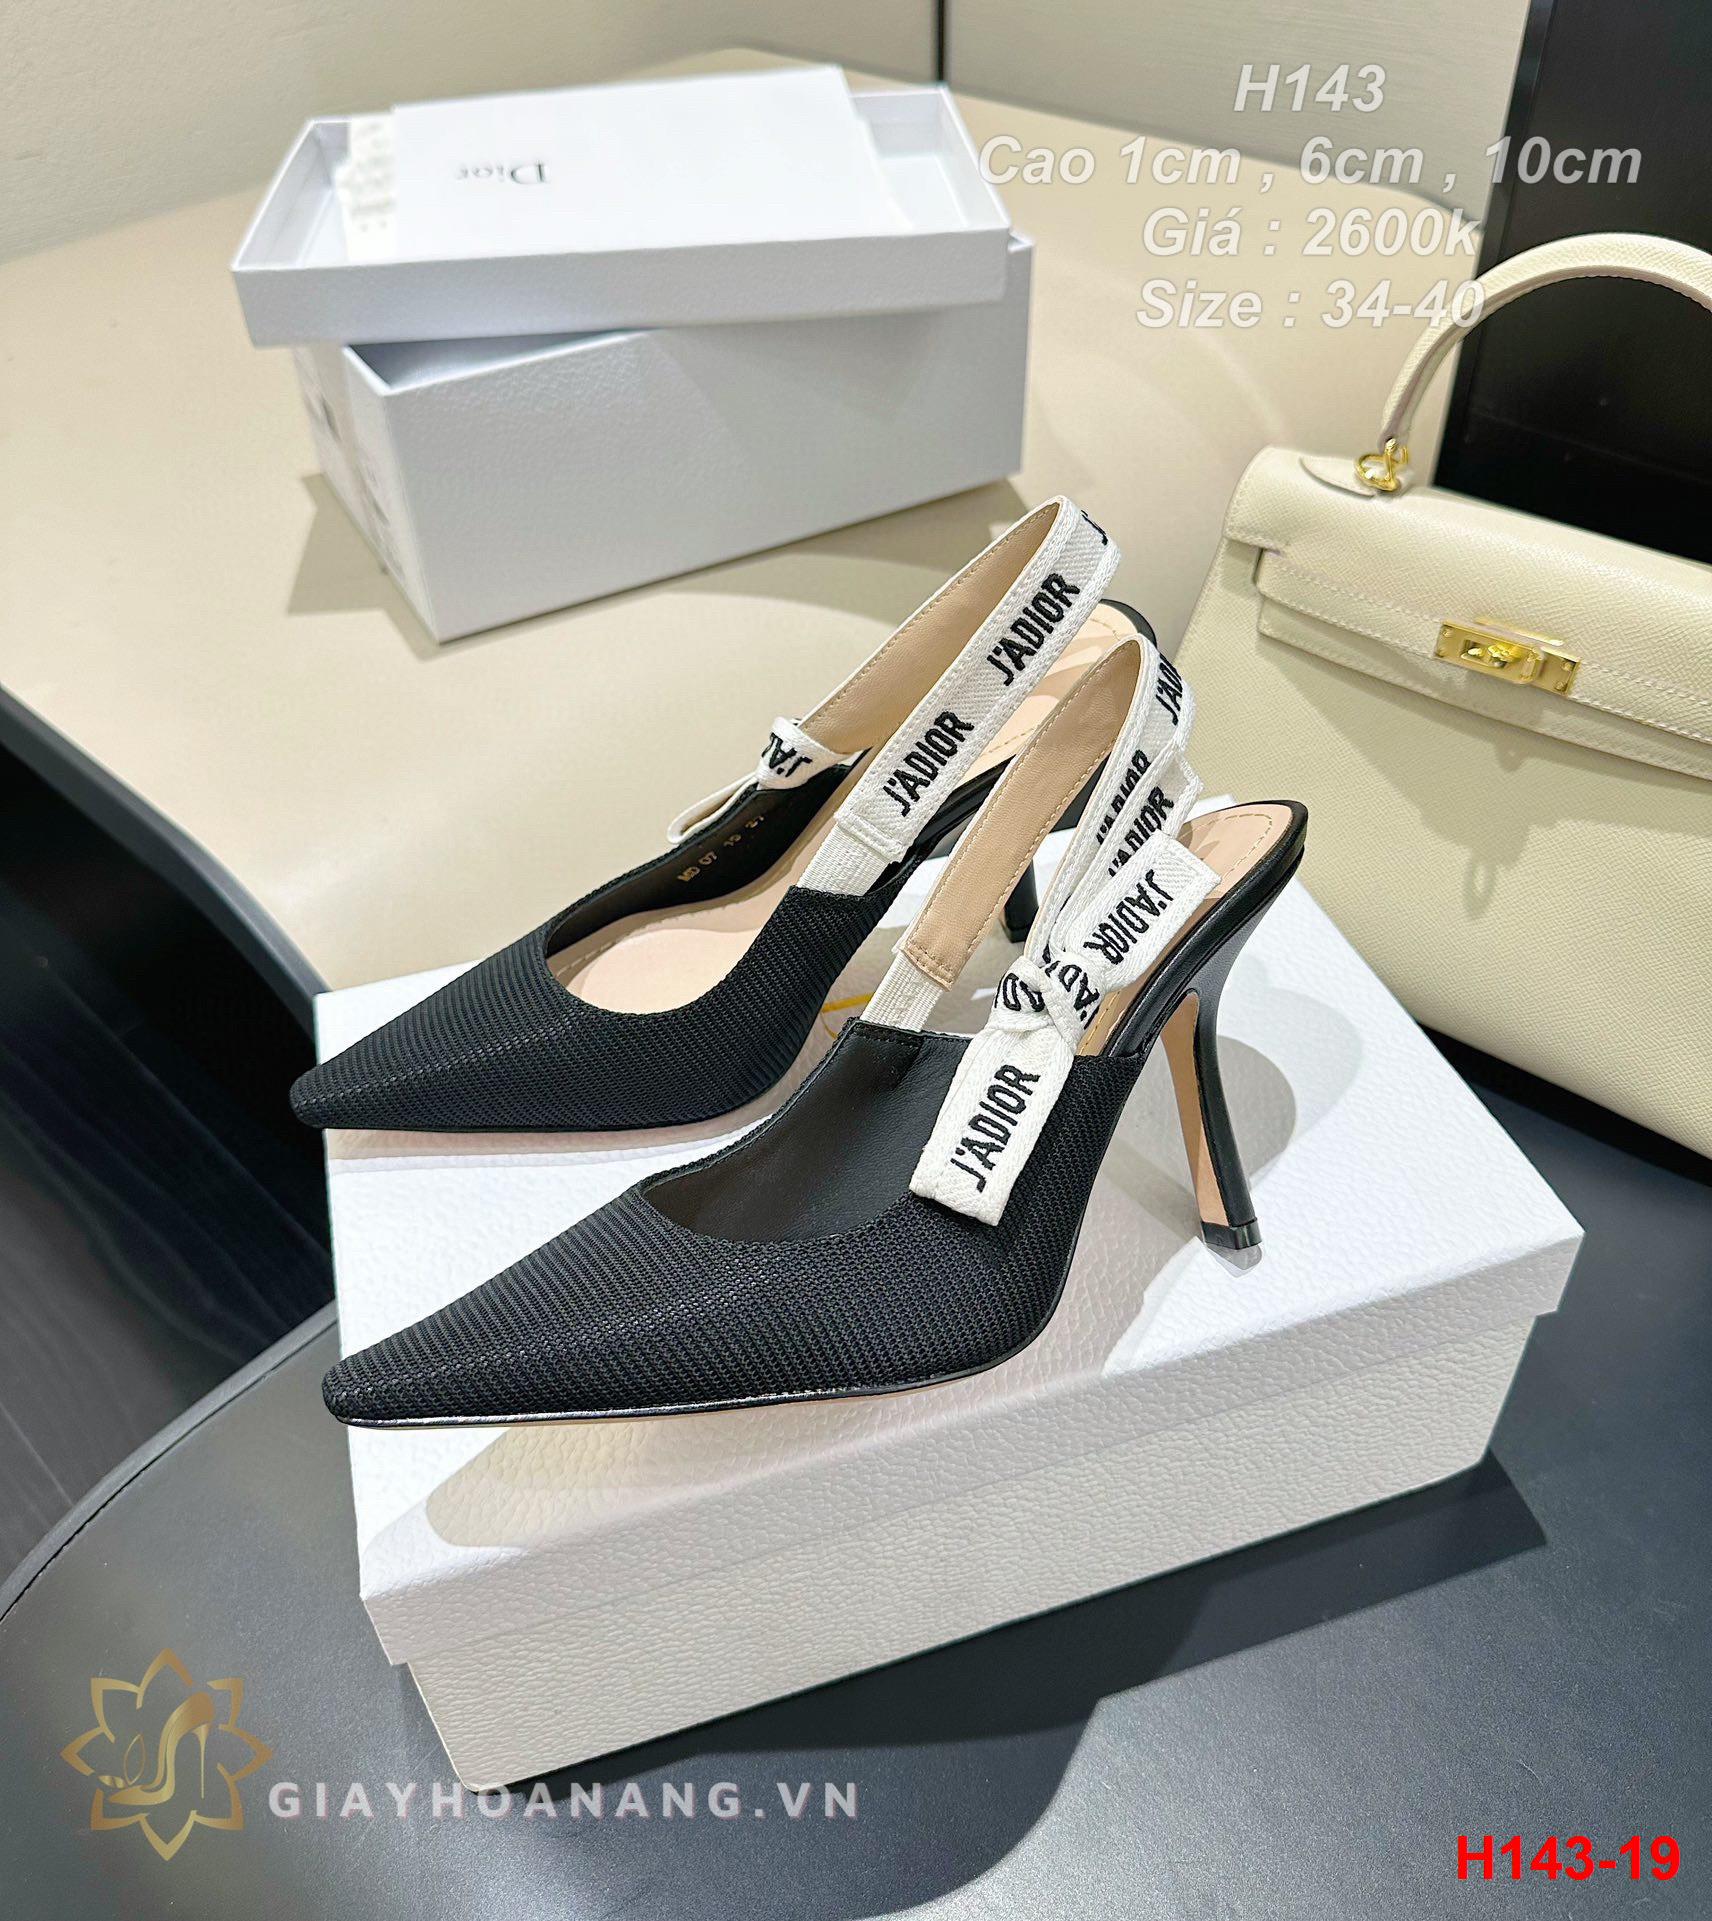 H143-19 Dior sandal cao gót 1cm , 6cm , 10cm siêu cấp